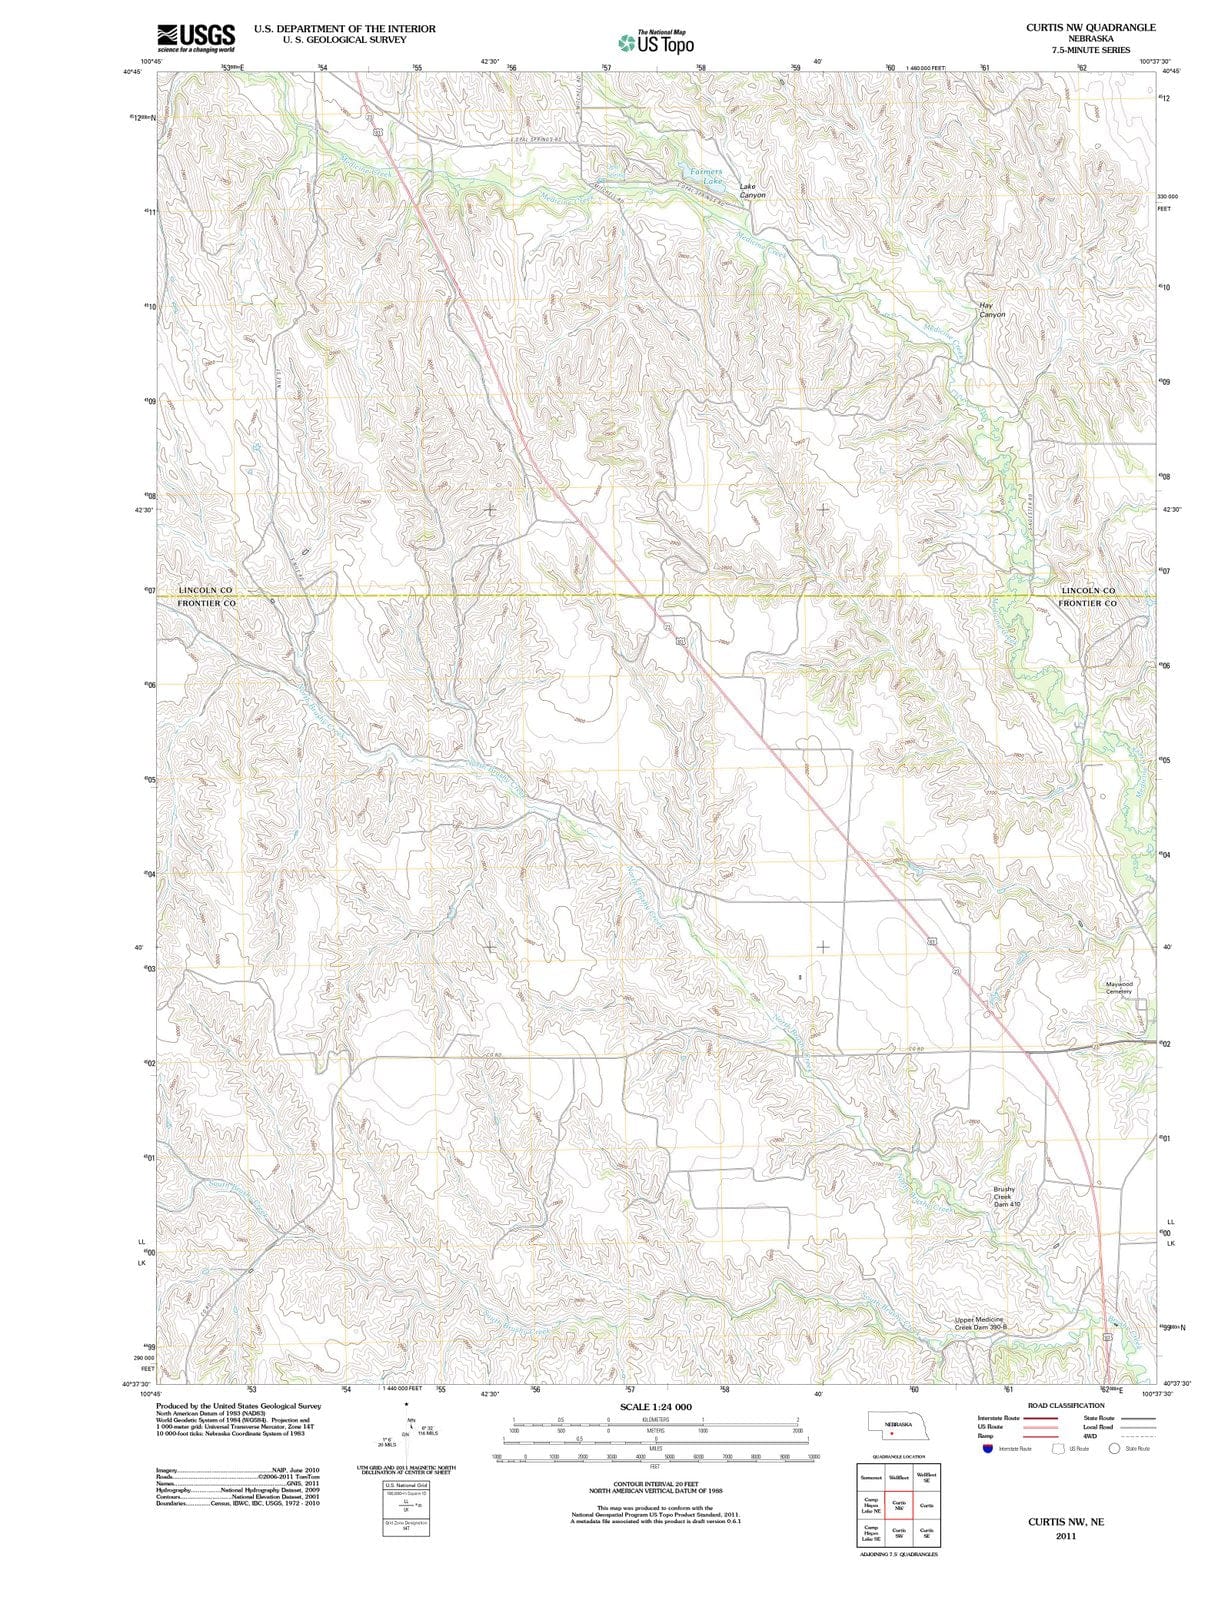 2011 Curtis, NE - Nebraska - USGS Topographic Map v2